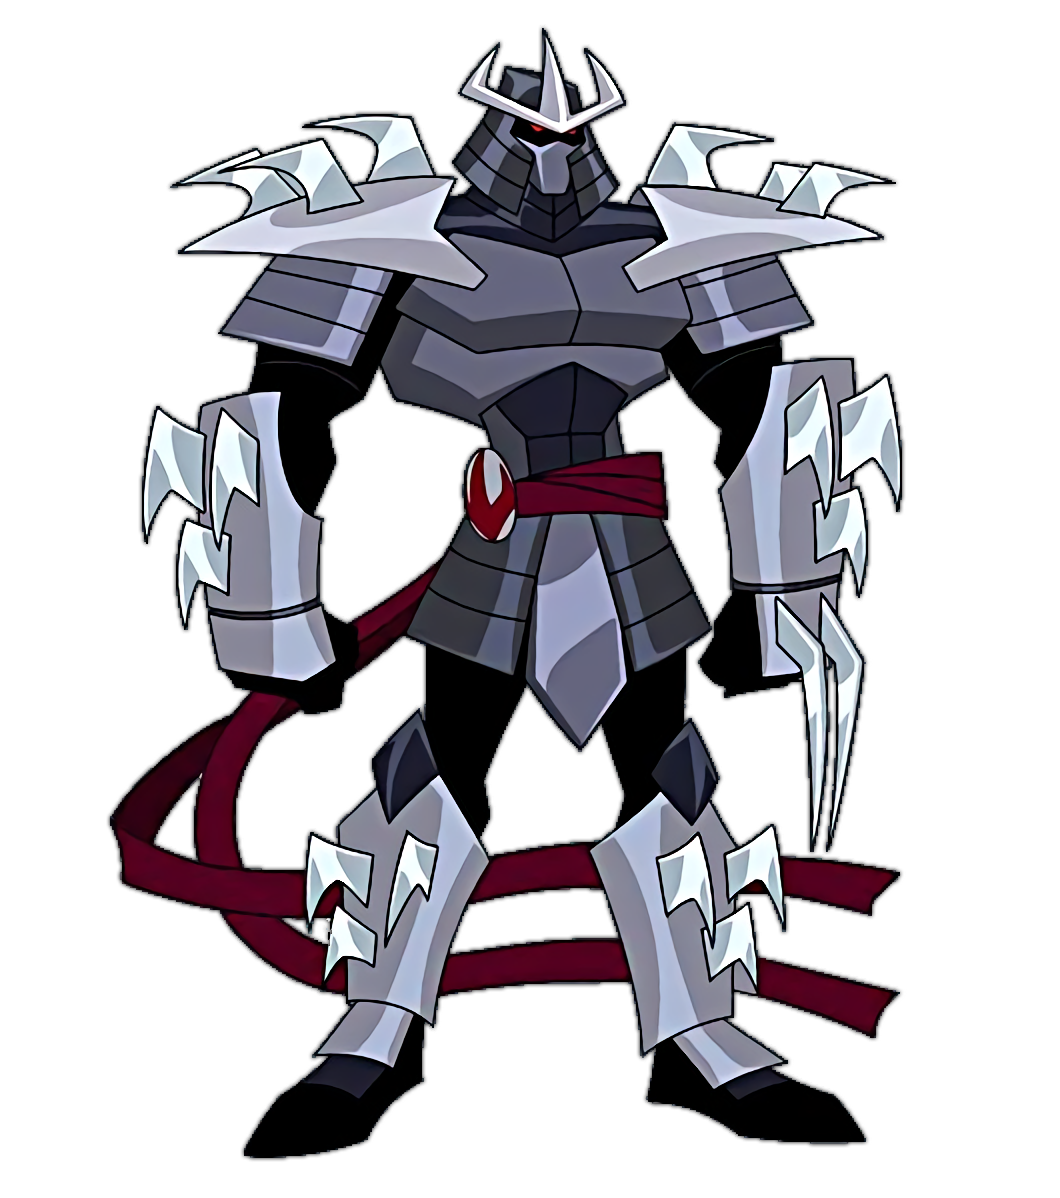 Shredder (Rise of the Teenage Mutant Ninja Turtles), Villains Wiki